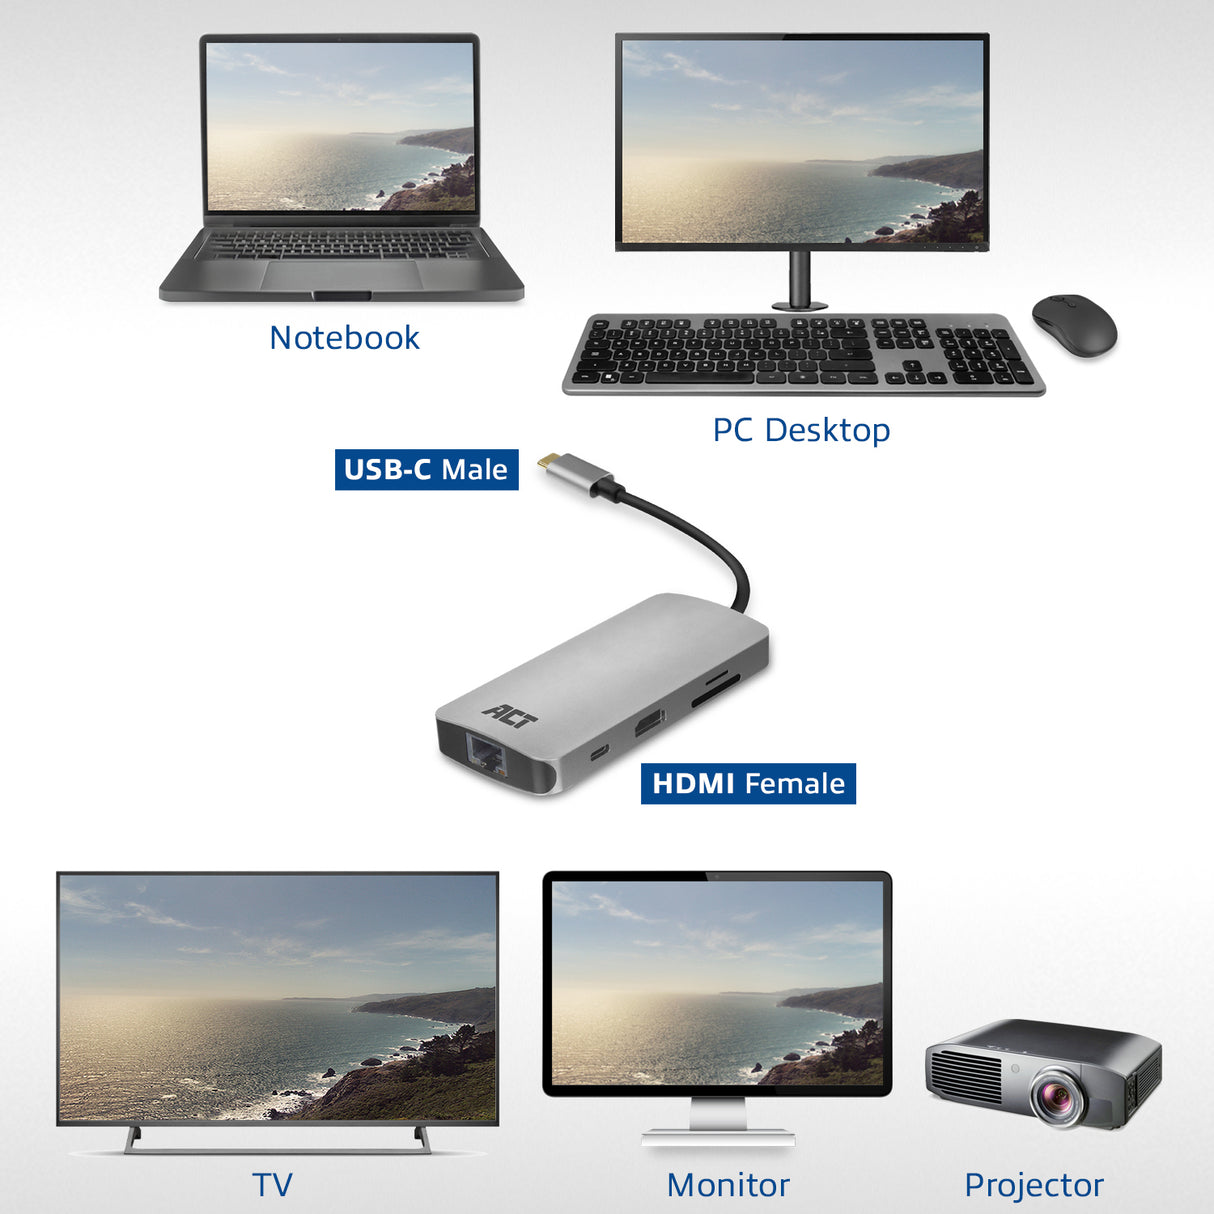 ACT AC7041 USB-C 4K Multiport Dock met HDMI, USB-A, Gigabit Ethernet, Card Reader and USB-C